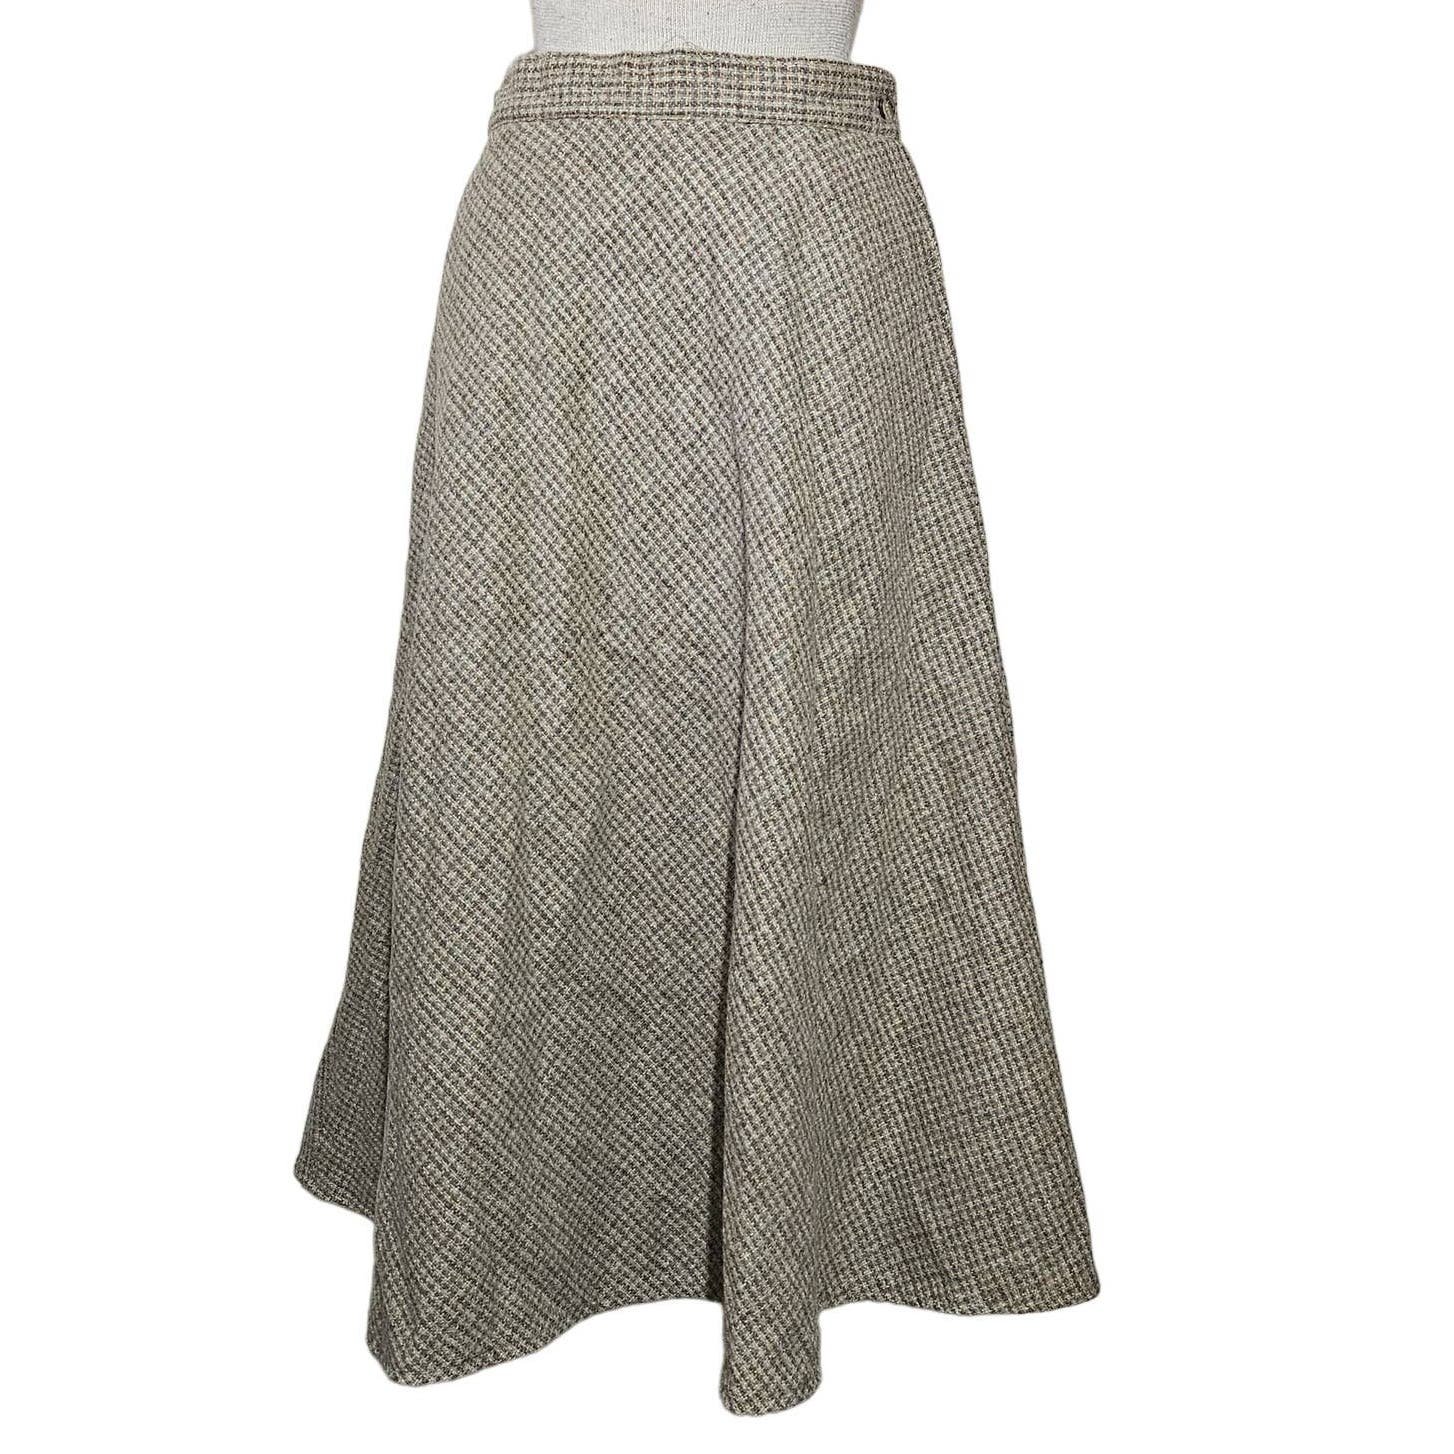 Affordable Vintage Tan Midi Skirt Size 12 HgPPNuEQ8 Che